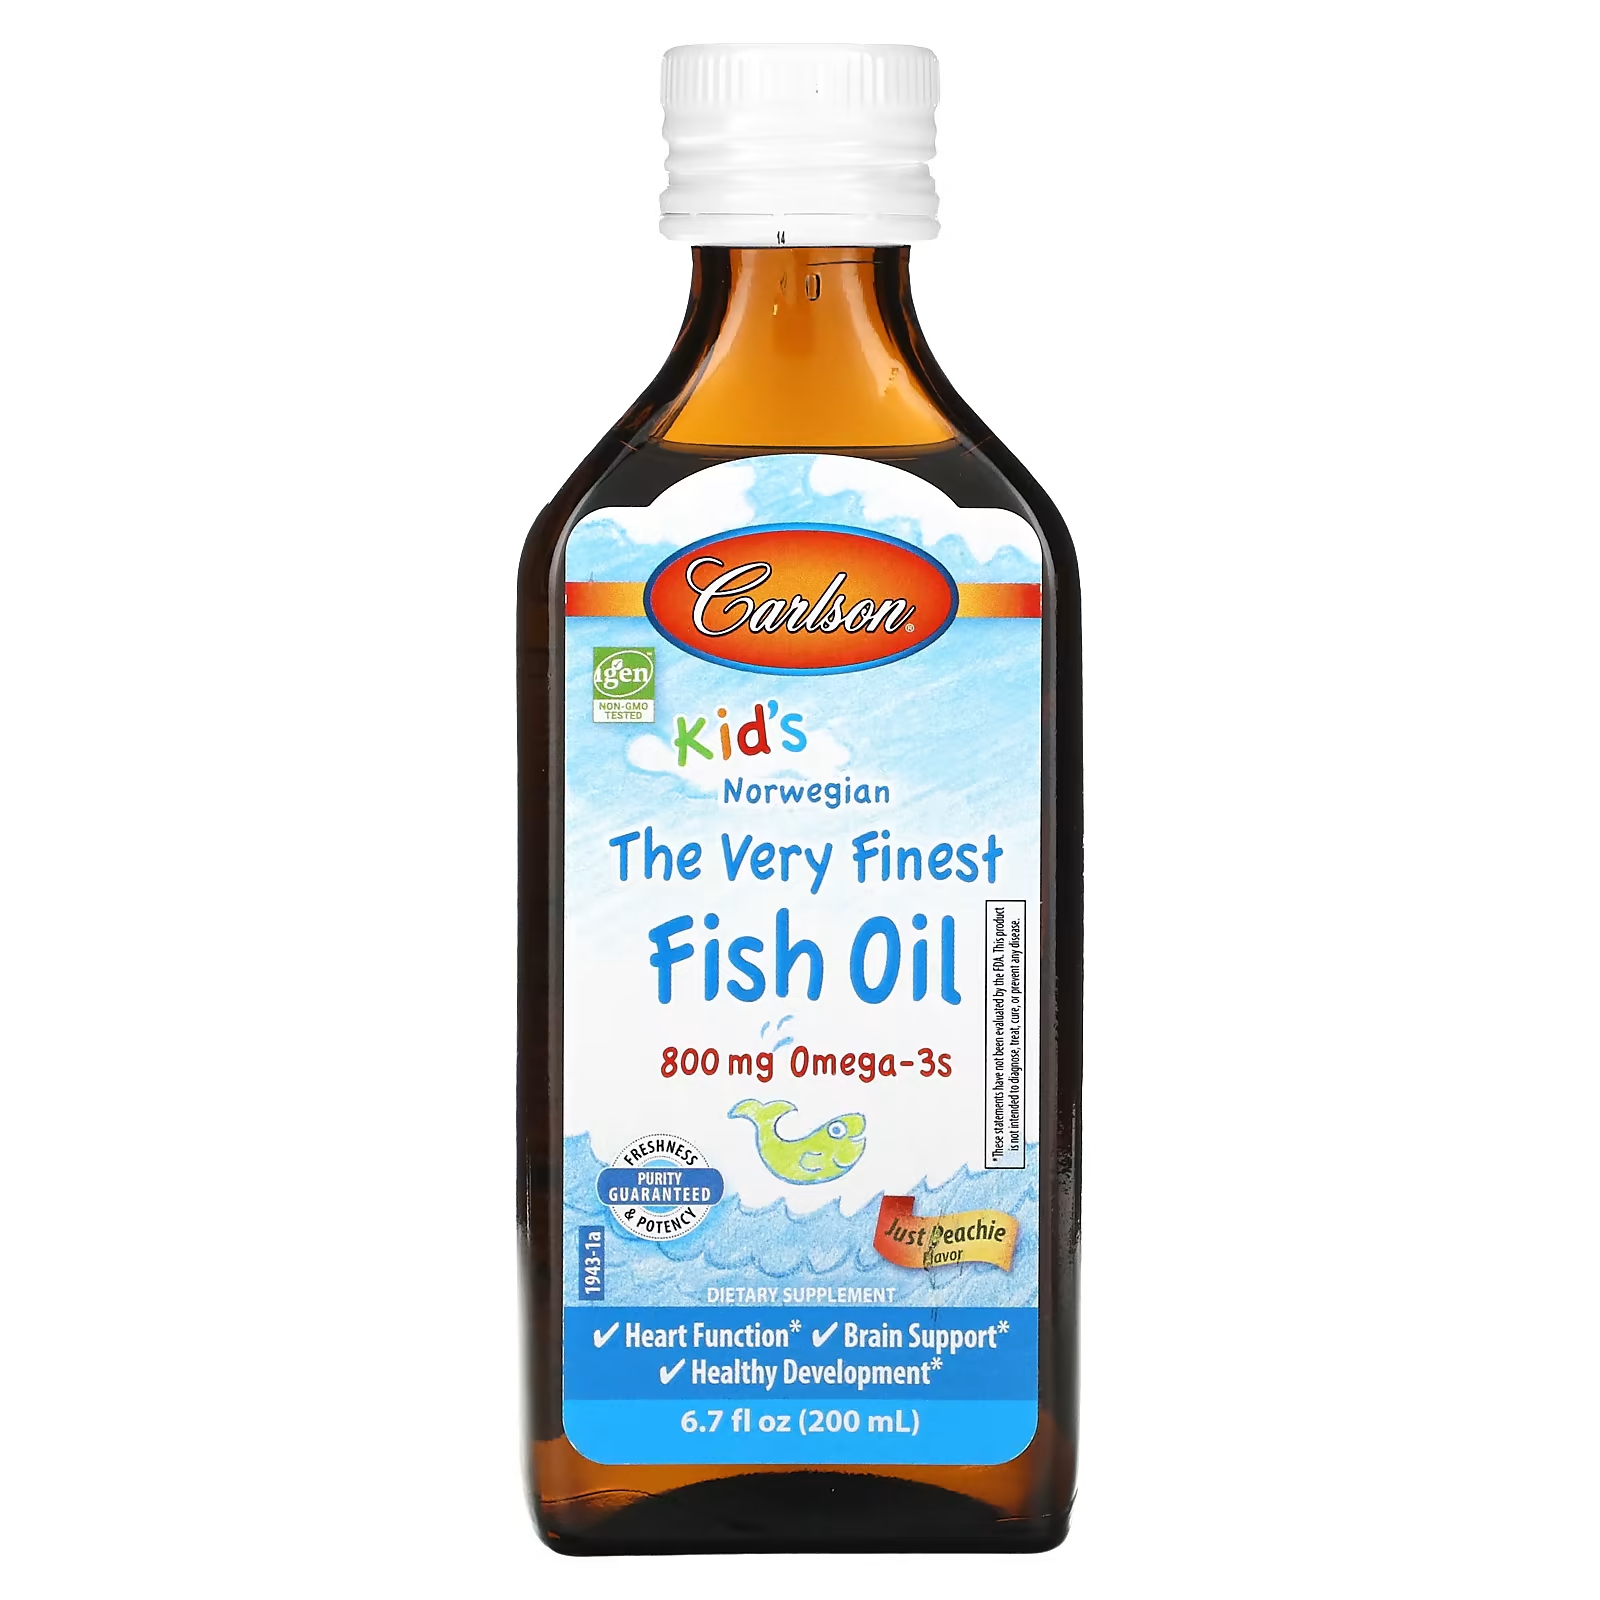 Carlson Kid's норвежский рыбий жир The Very Finest Just Peachie, 800 мг, 6,7 жидких унций (200 мл) carlson the very finest fish oil just peachie 1 600 mg 6 7 fl oz 200 ml